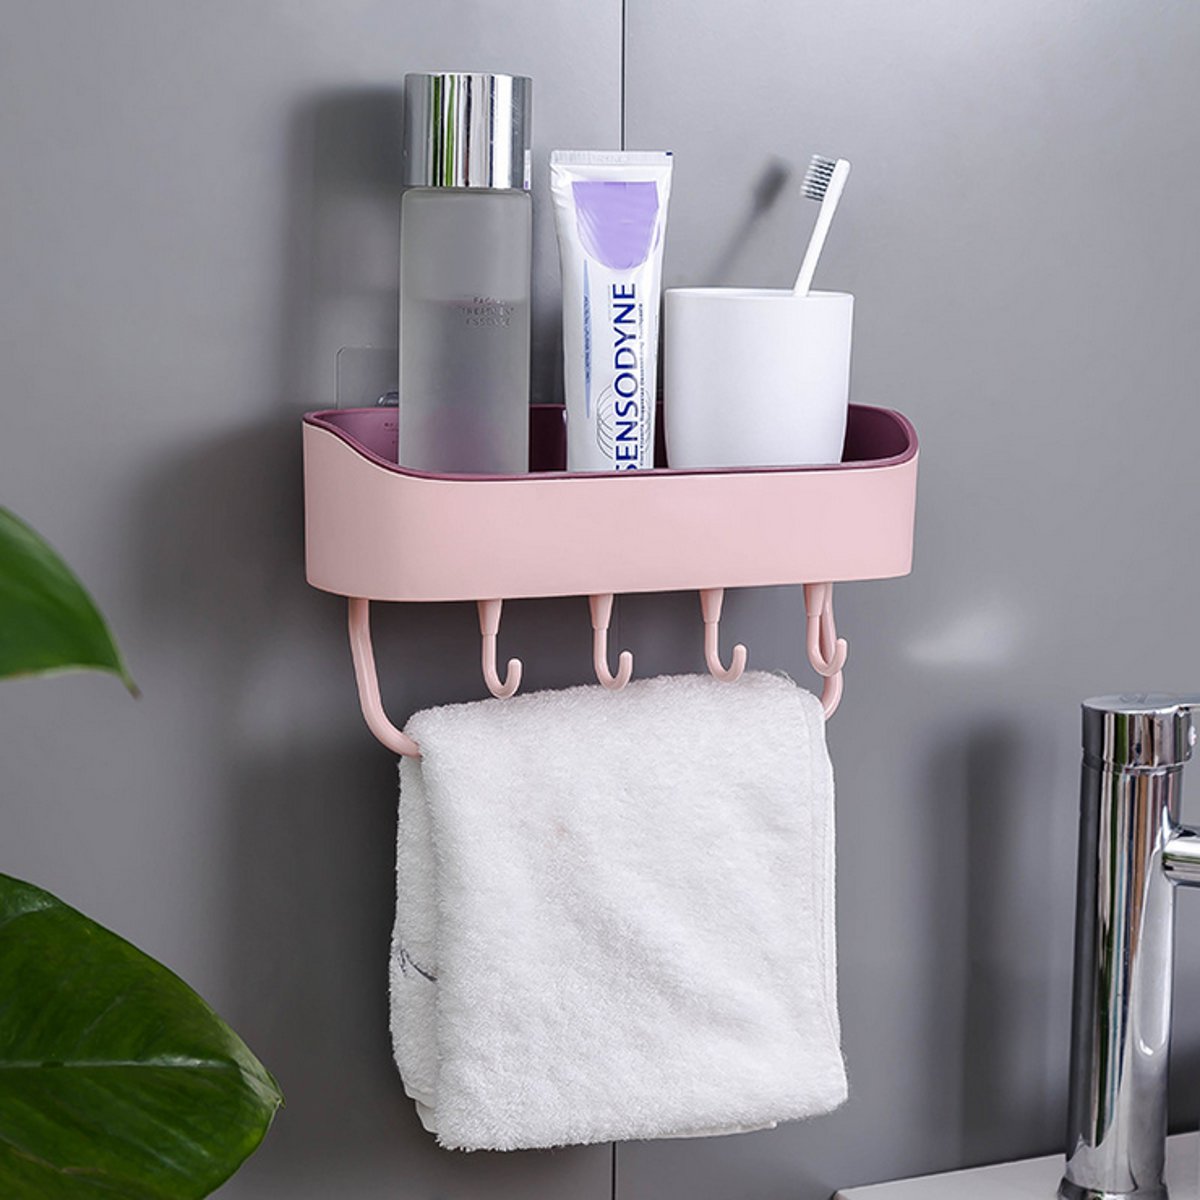 Self-adhesive-Wall-Hanging-Storage-Rack-Shelf-Hook-Home-Kitchen-Holder-Organizer-Towel-Holder-1552900-4